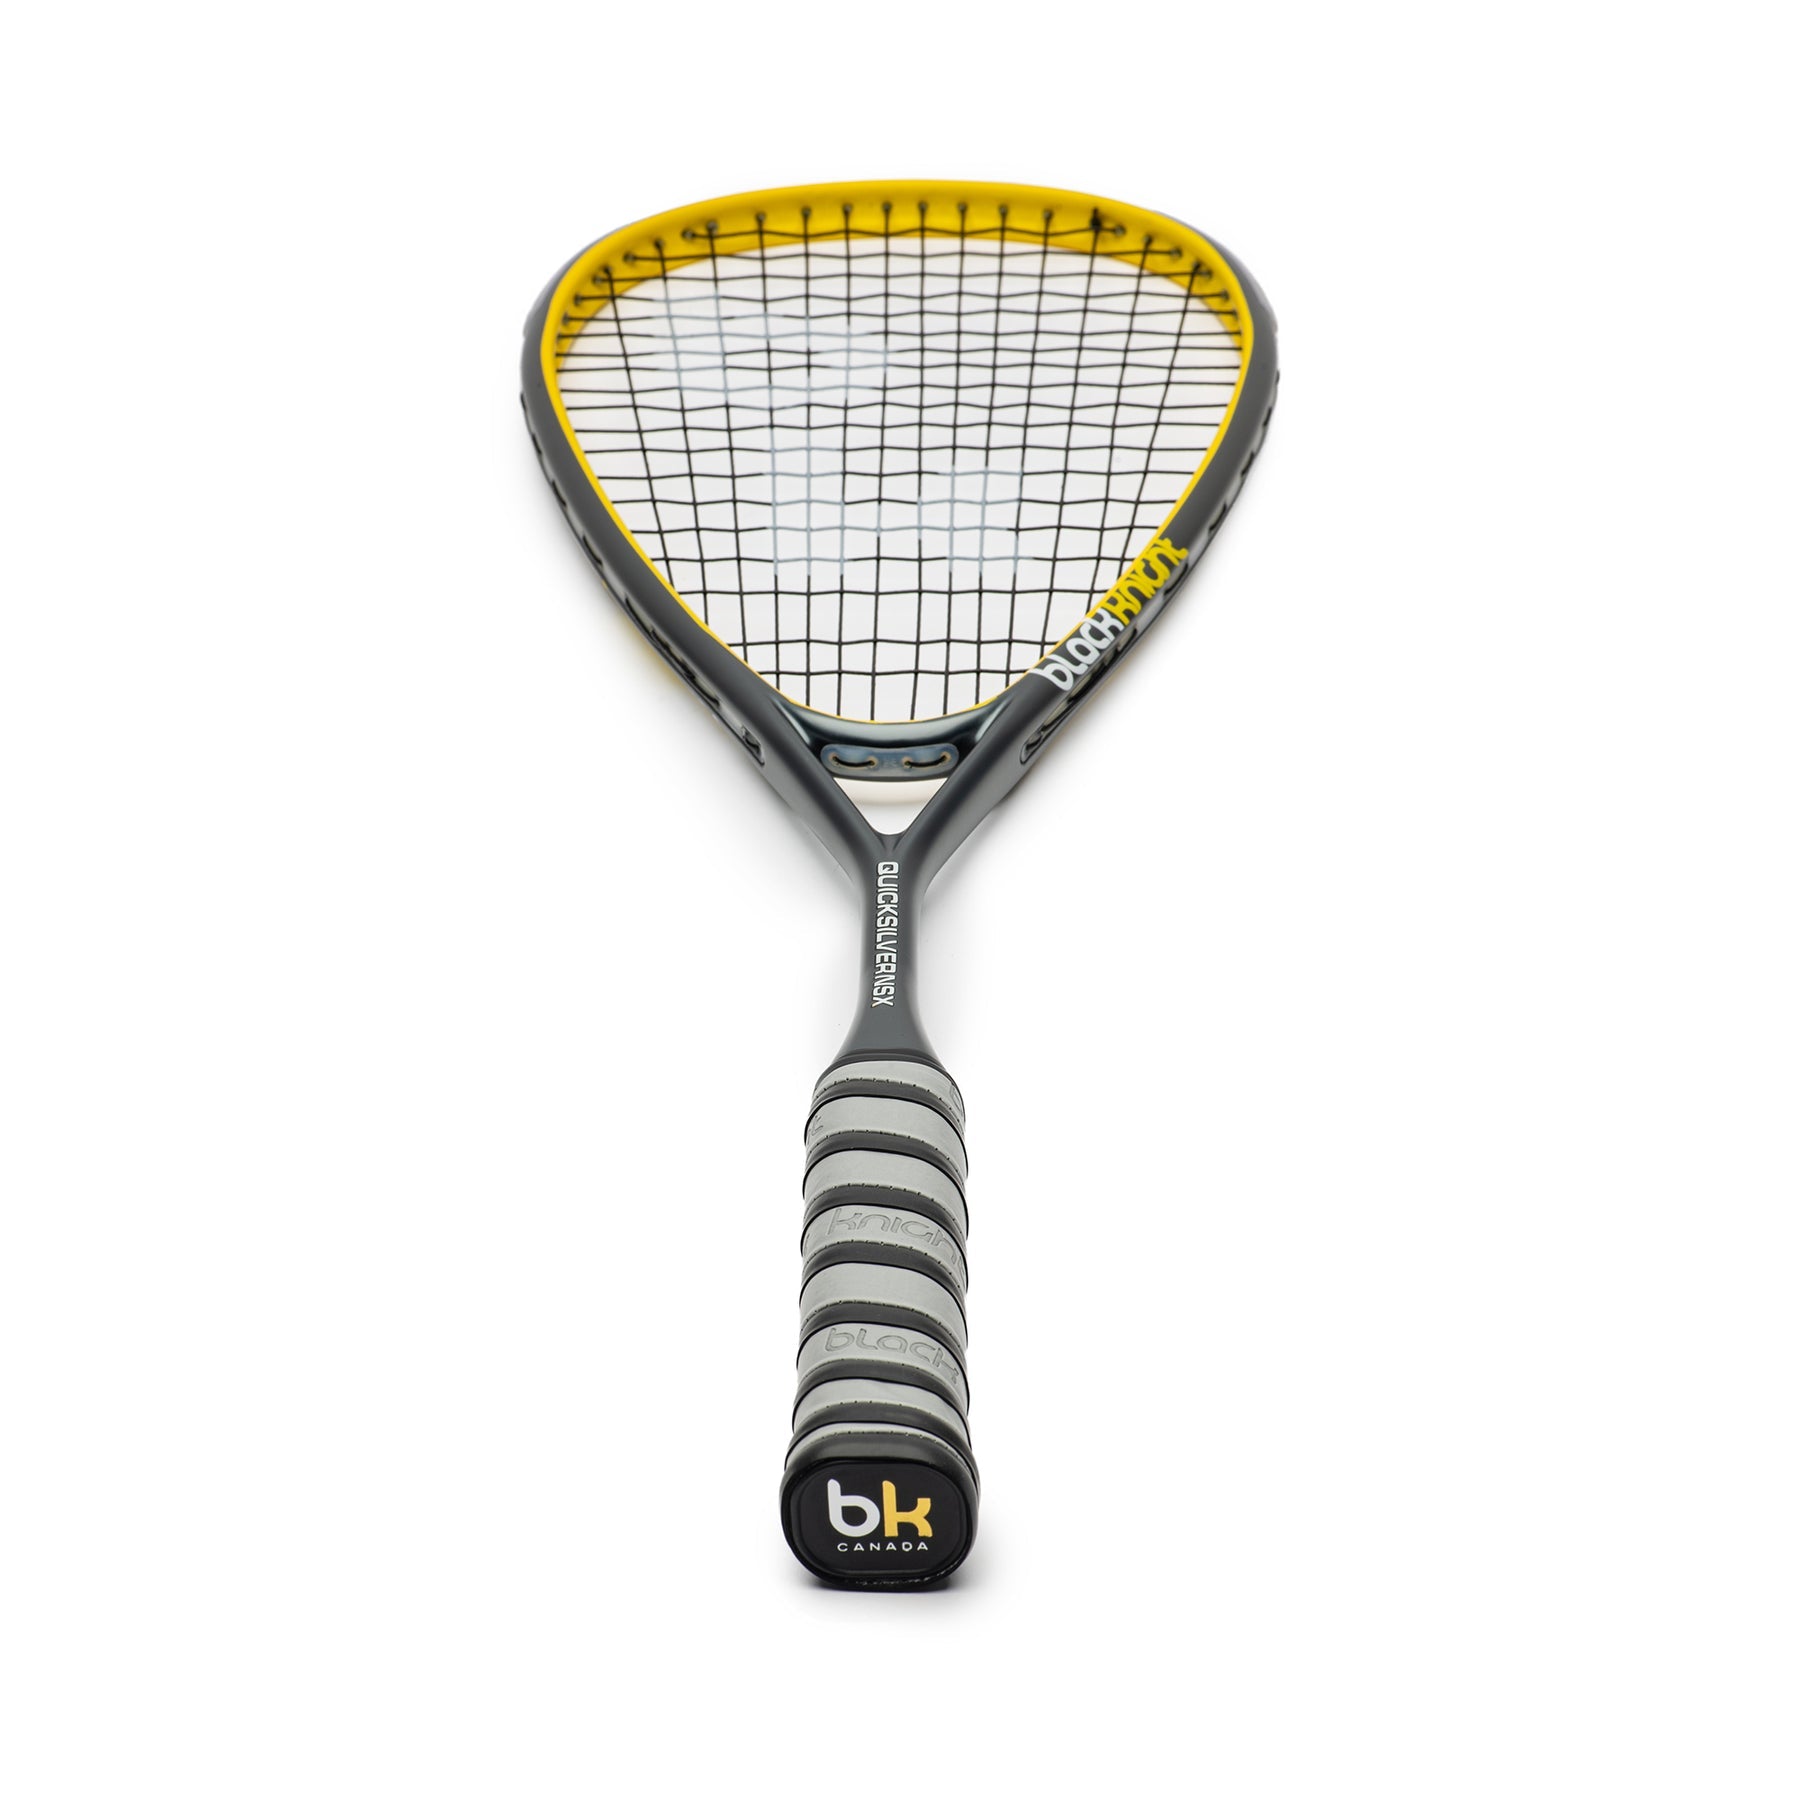 Black Knight Quicksilver nXS Squash Racquet